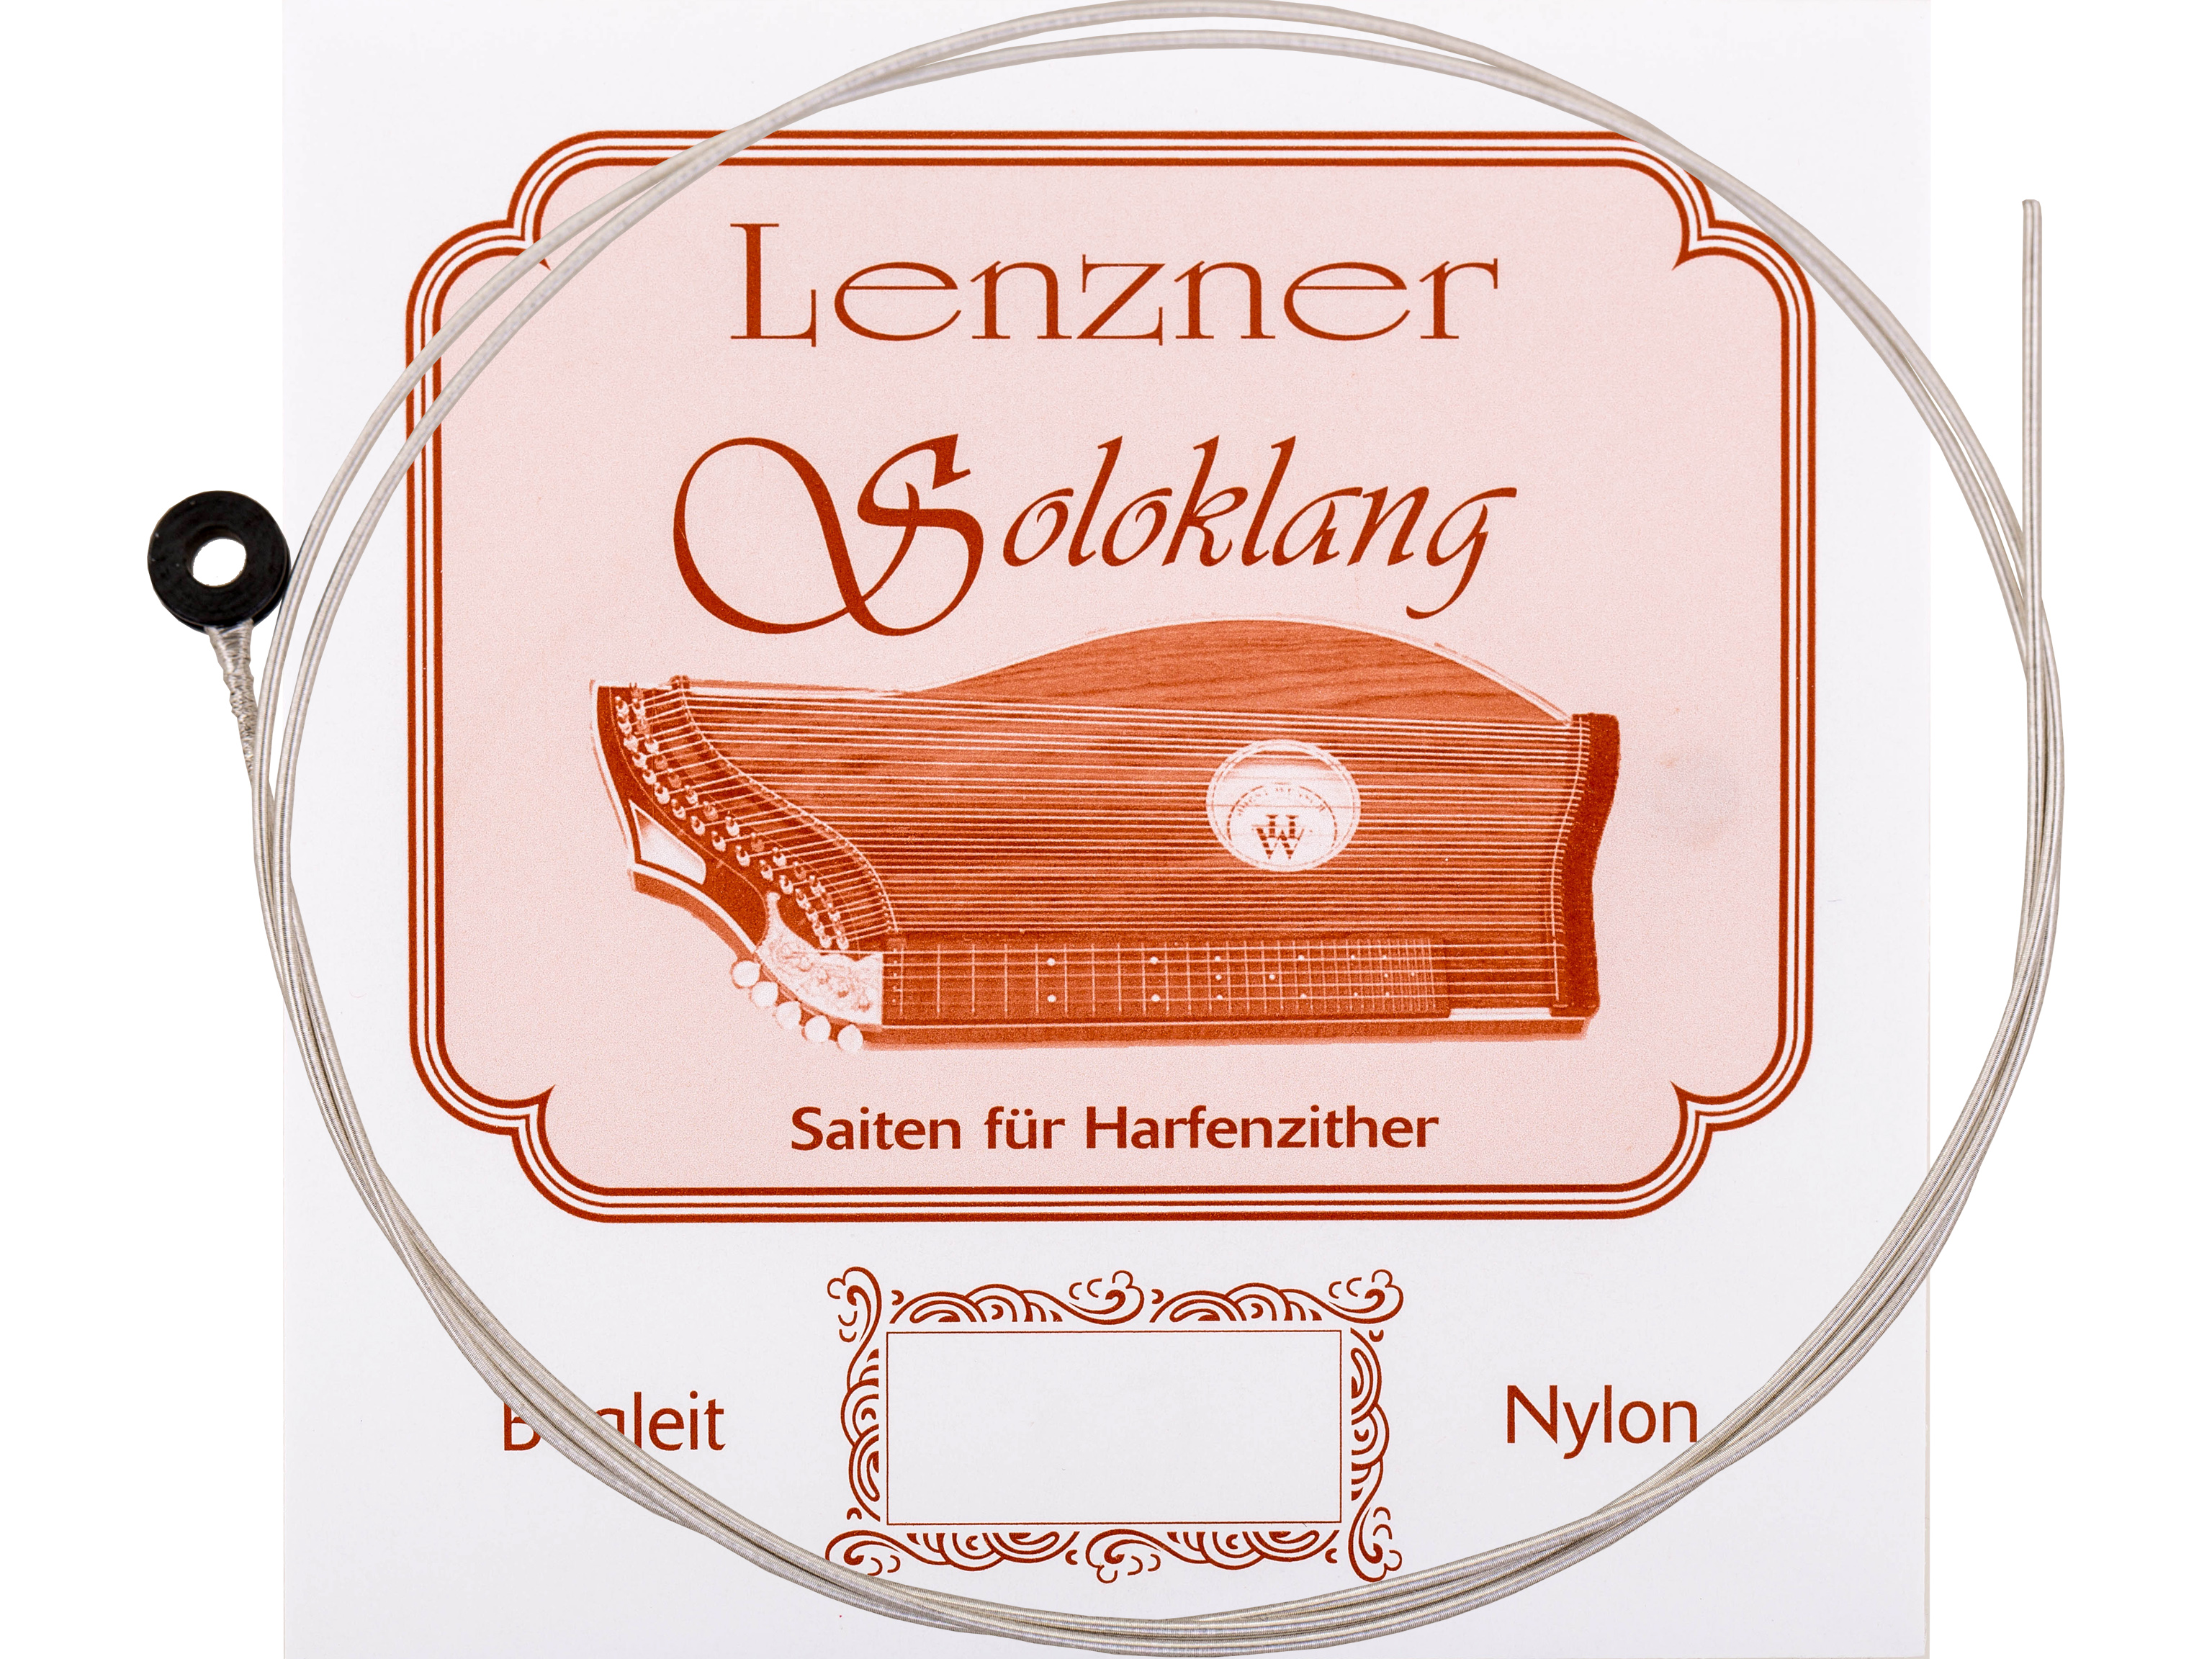 Lenzner 10. fis Zithersaite Soloklang Begleit